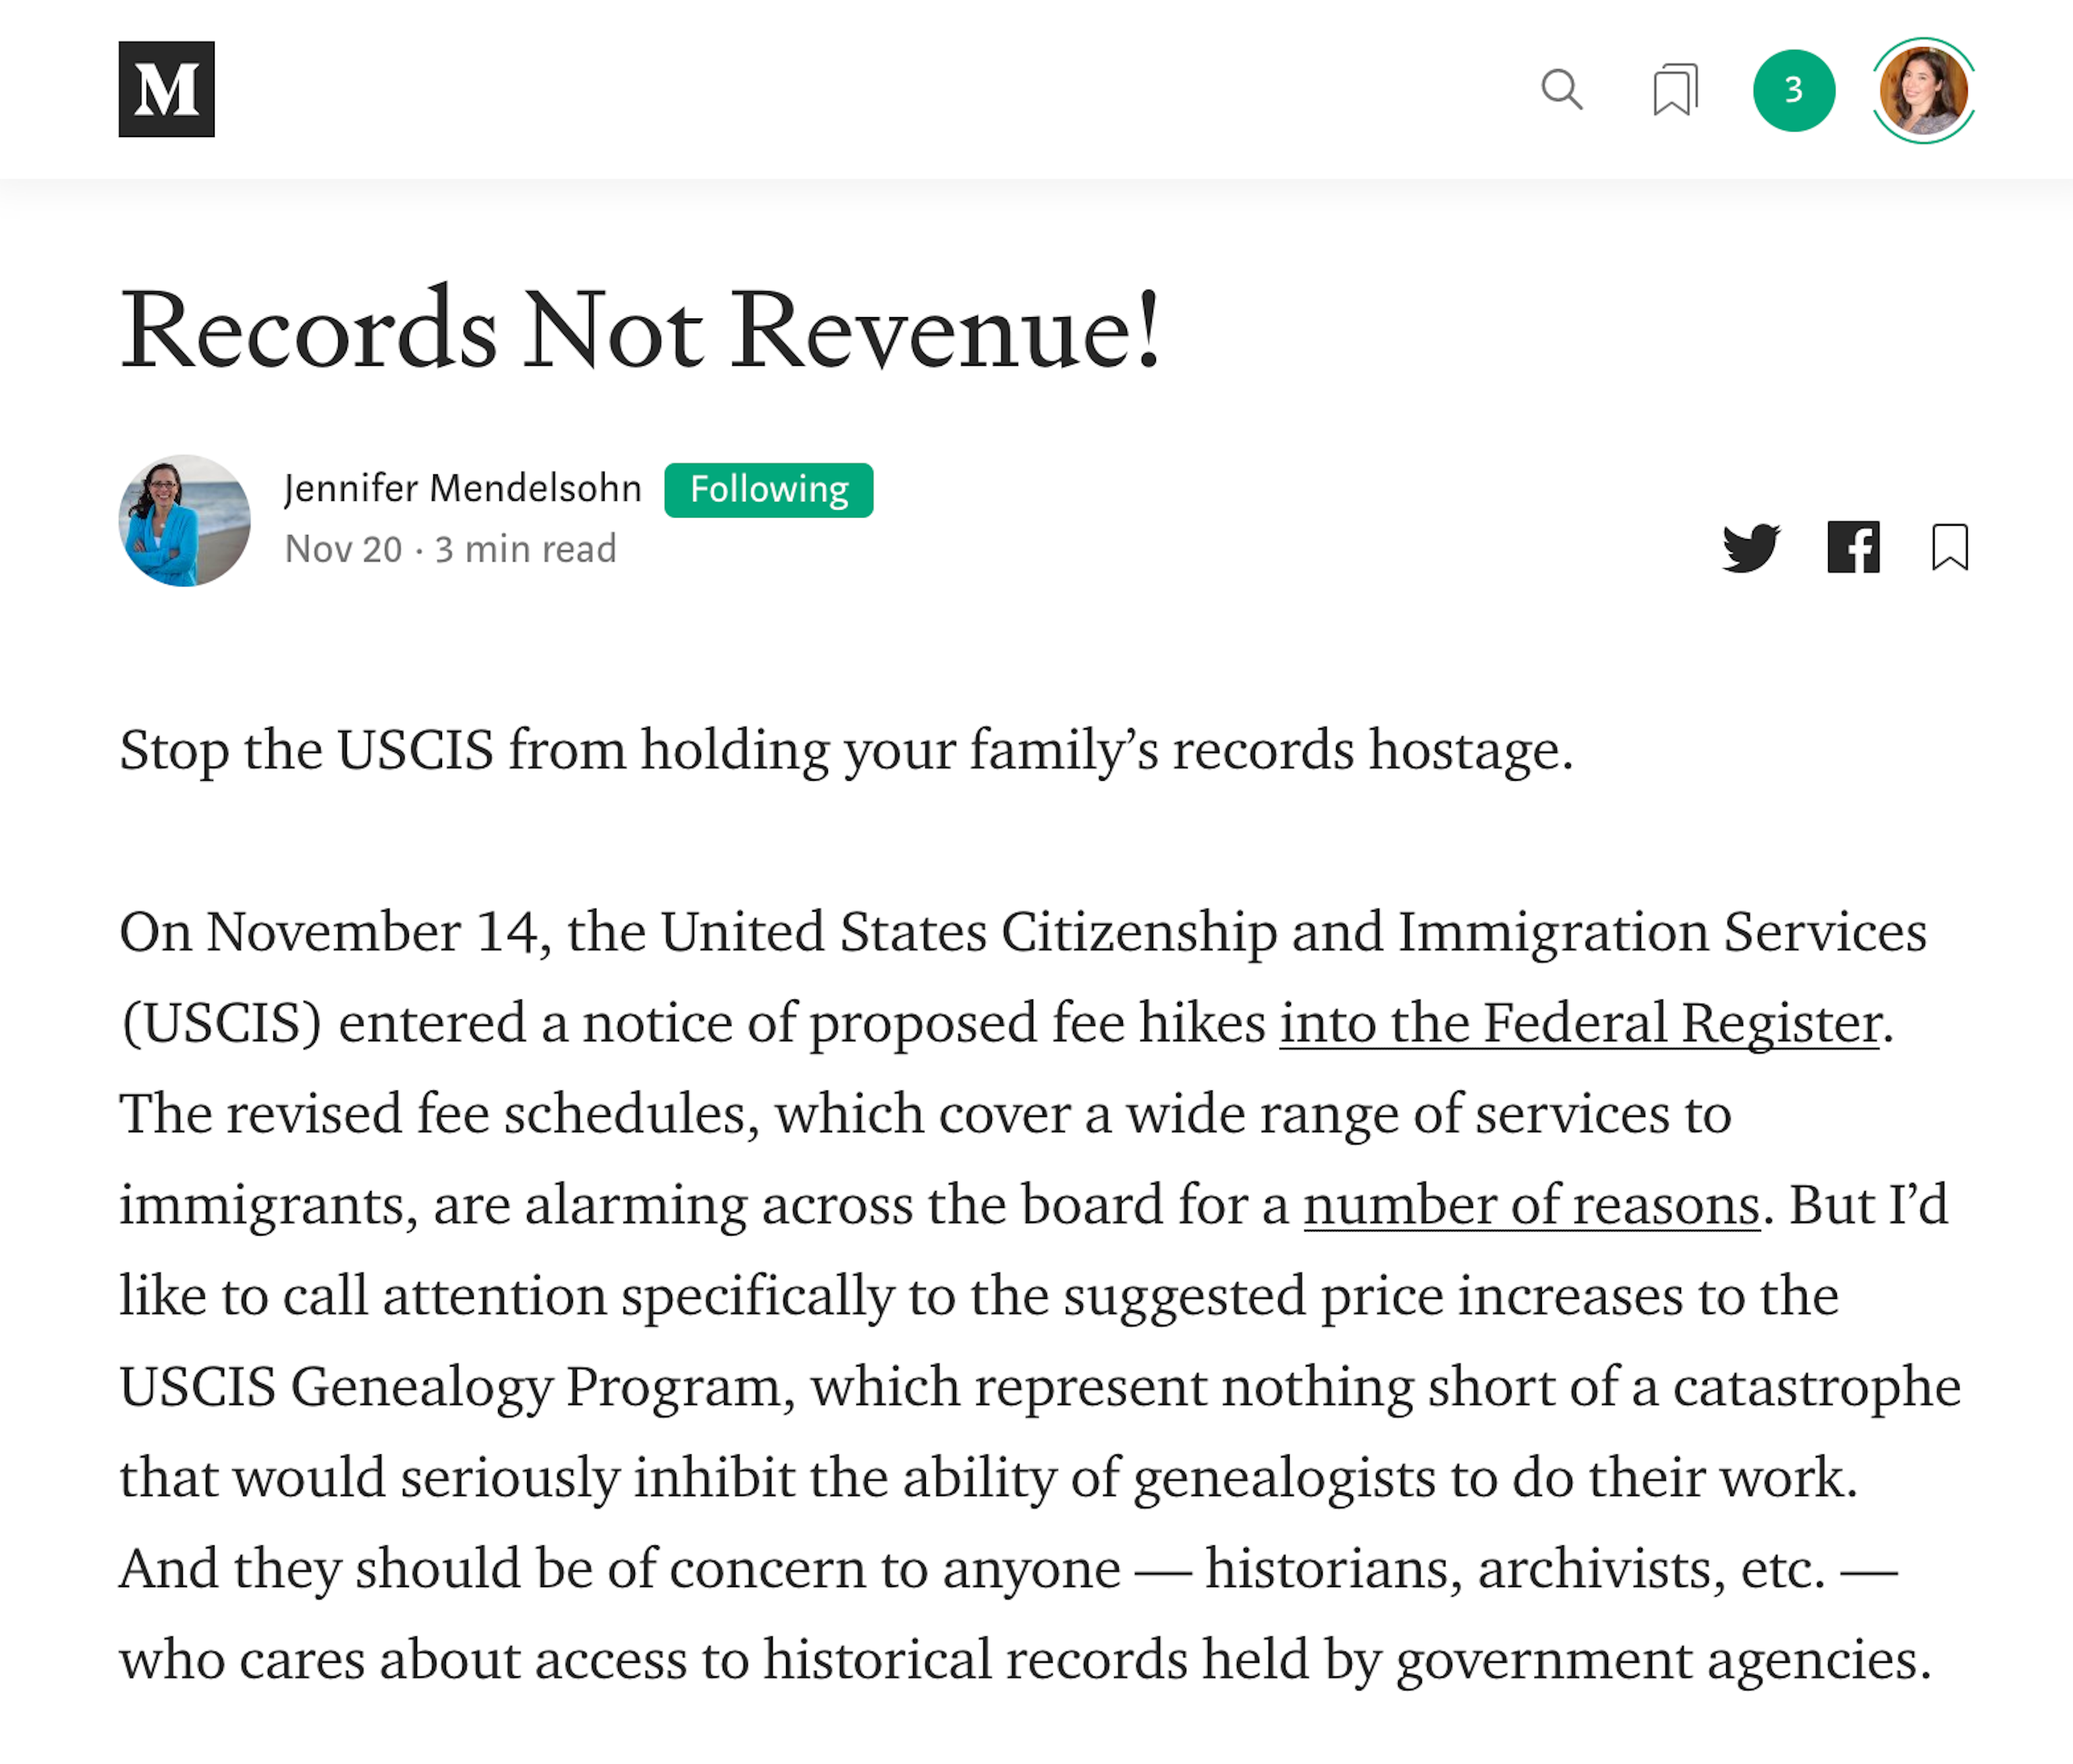 Records Not Revenue!